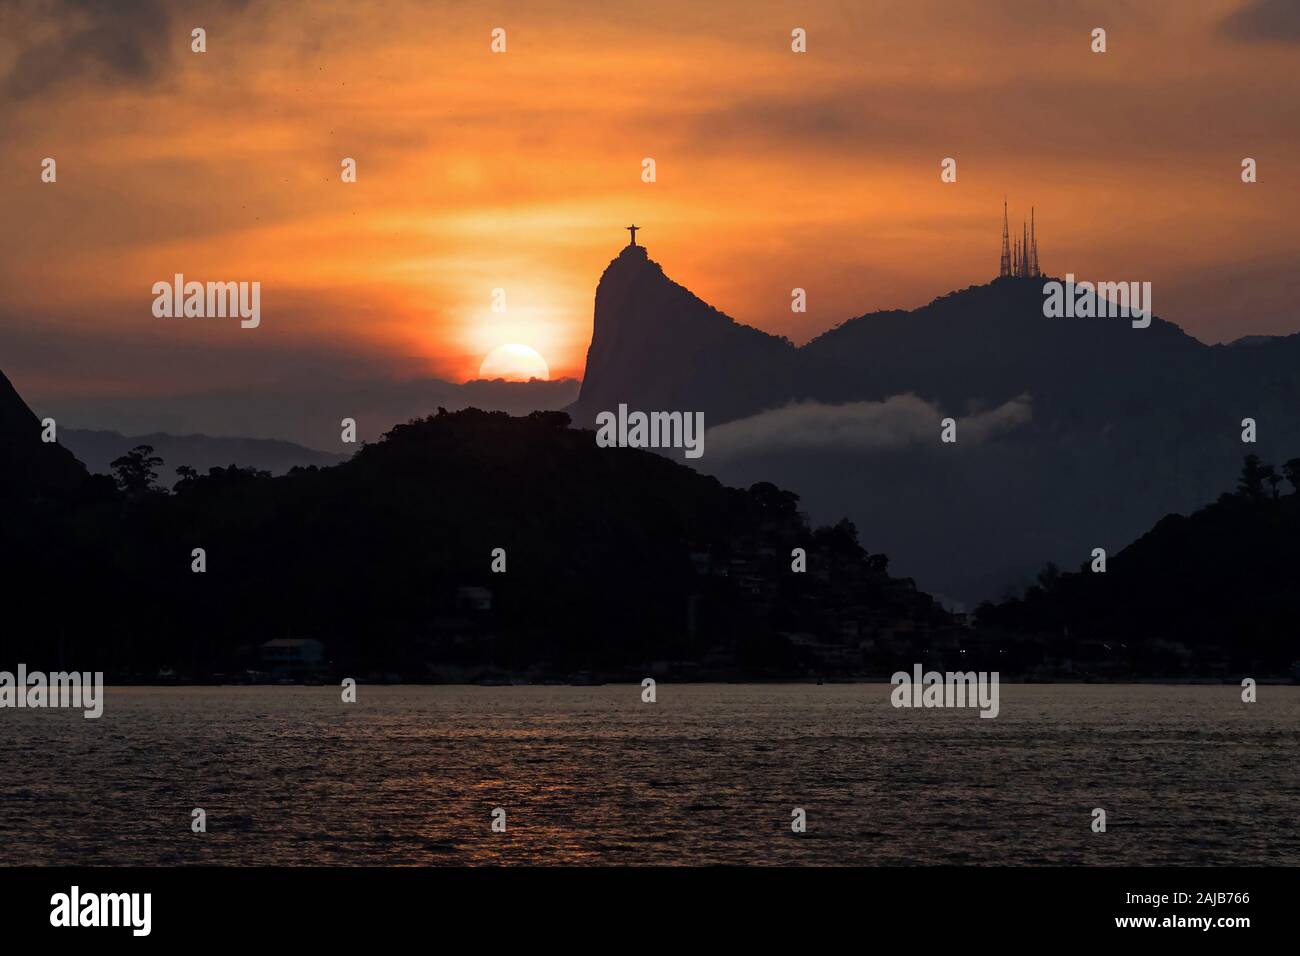 Sun setting behind the famous Christ the Redeemer statue atop the Corcovado Mountain in Rio de Janeiro, Brazil. Stock Photo